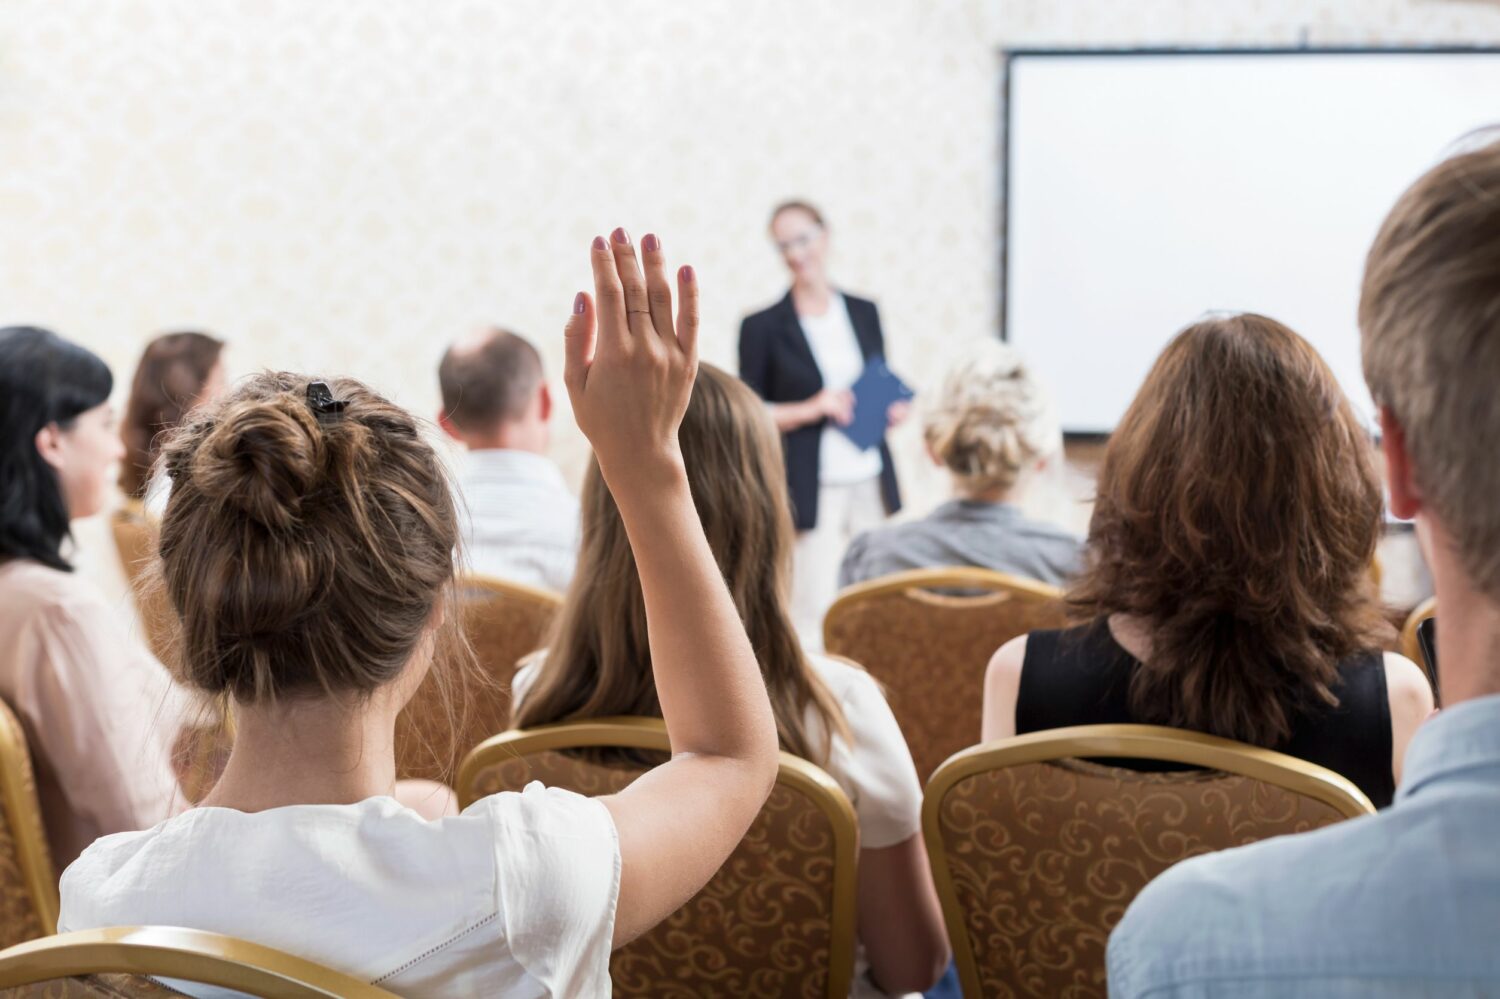 Photo description: listener raising hand to ask question during seminar.